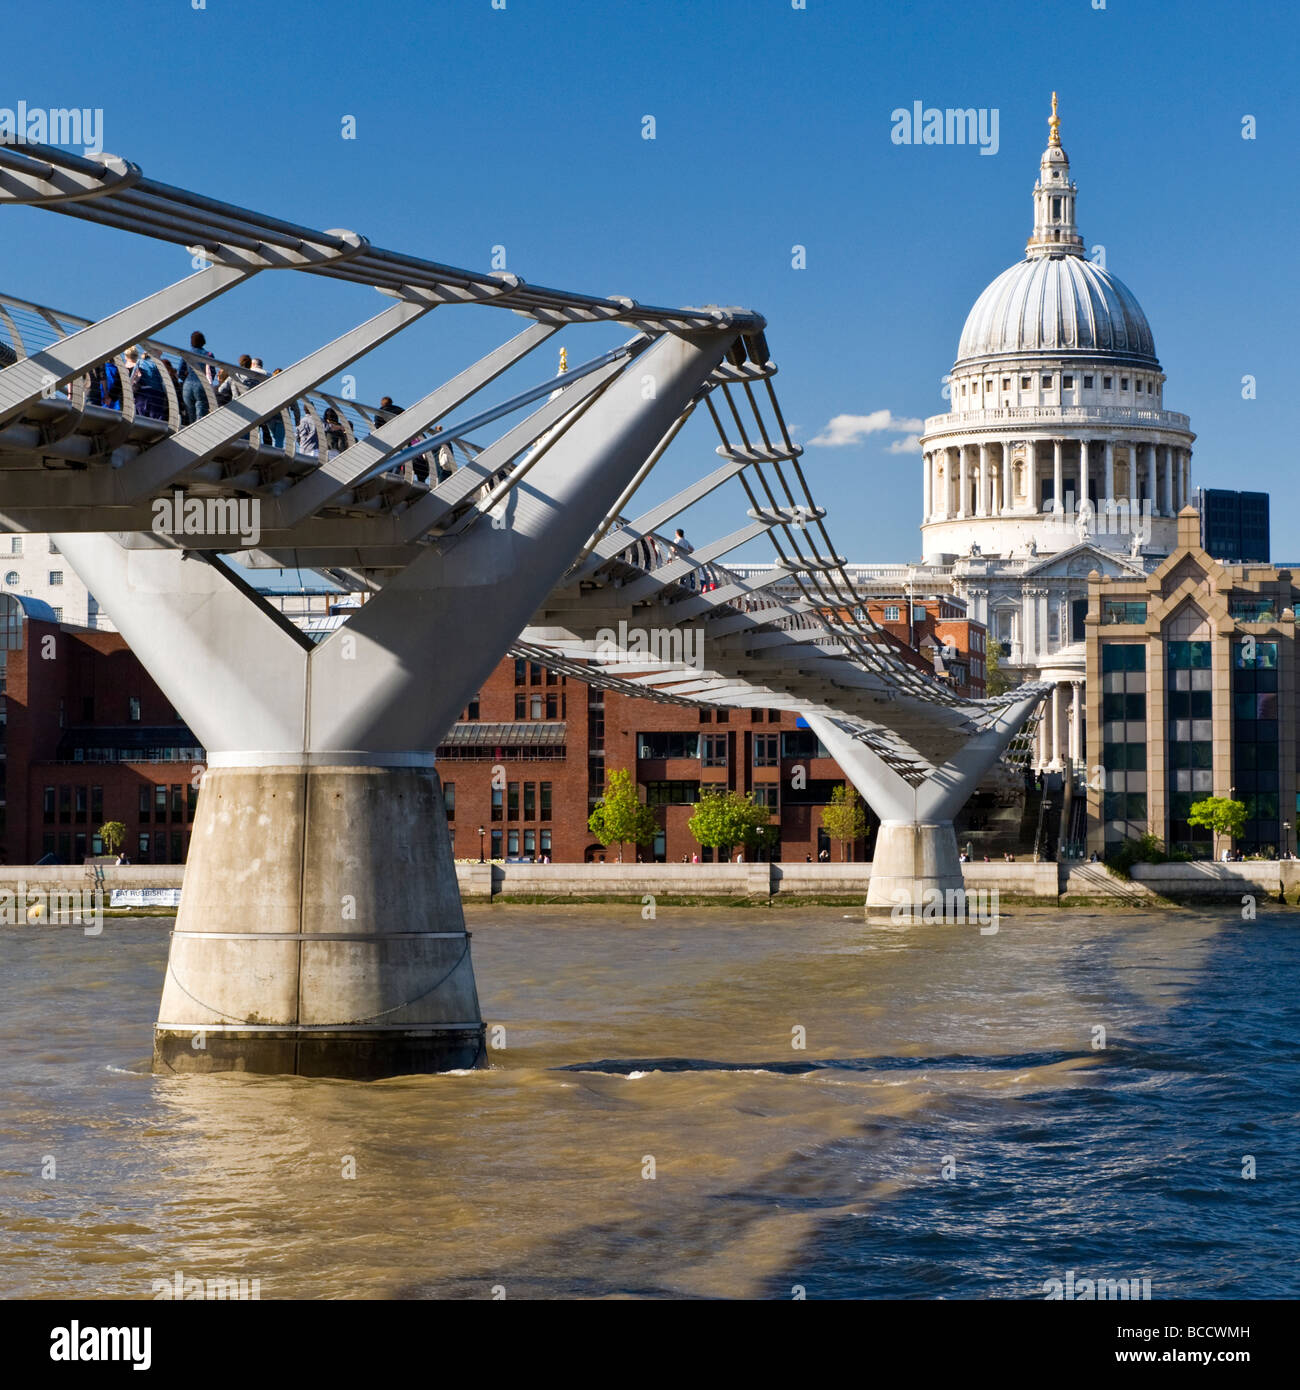 St Paul's Cathedral, The Milennium Bridge & River Thames, London, England, UK Stock Photo